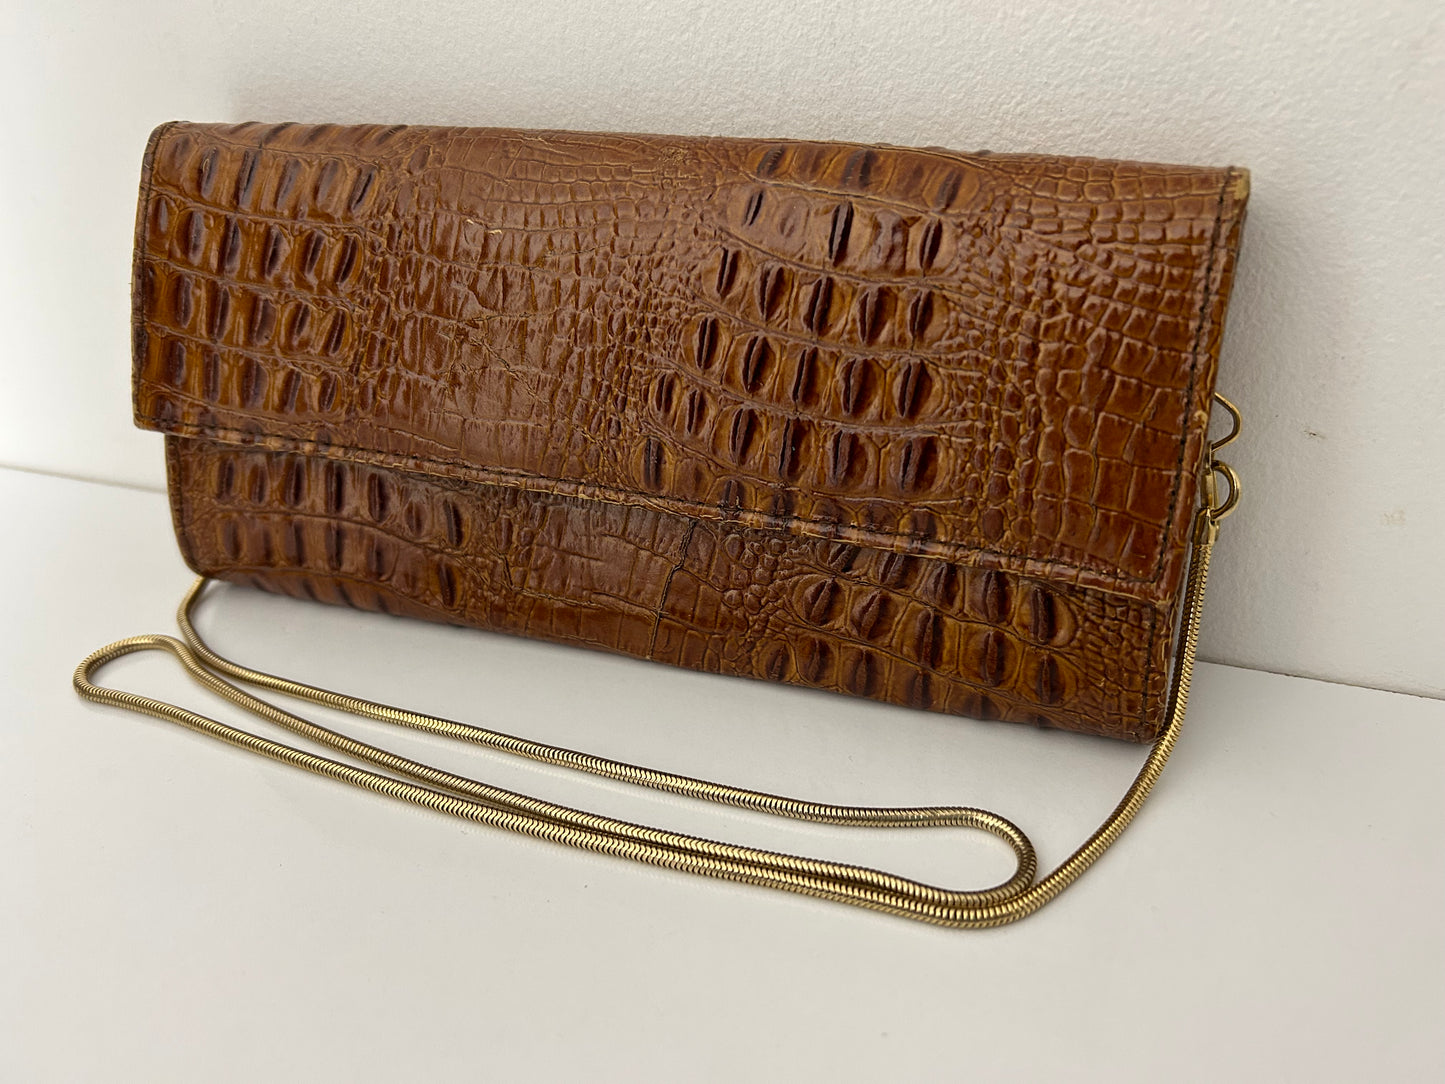 Vintage 1970s Tan Brown Leather Reptile Clutch Or Shoulder Bag